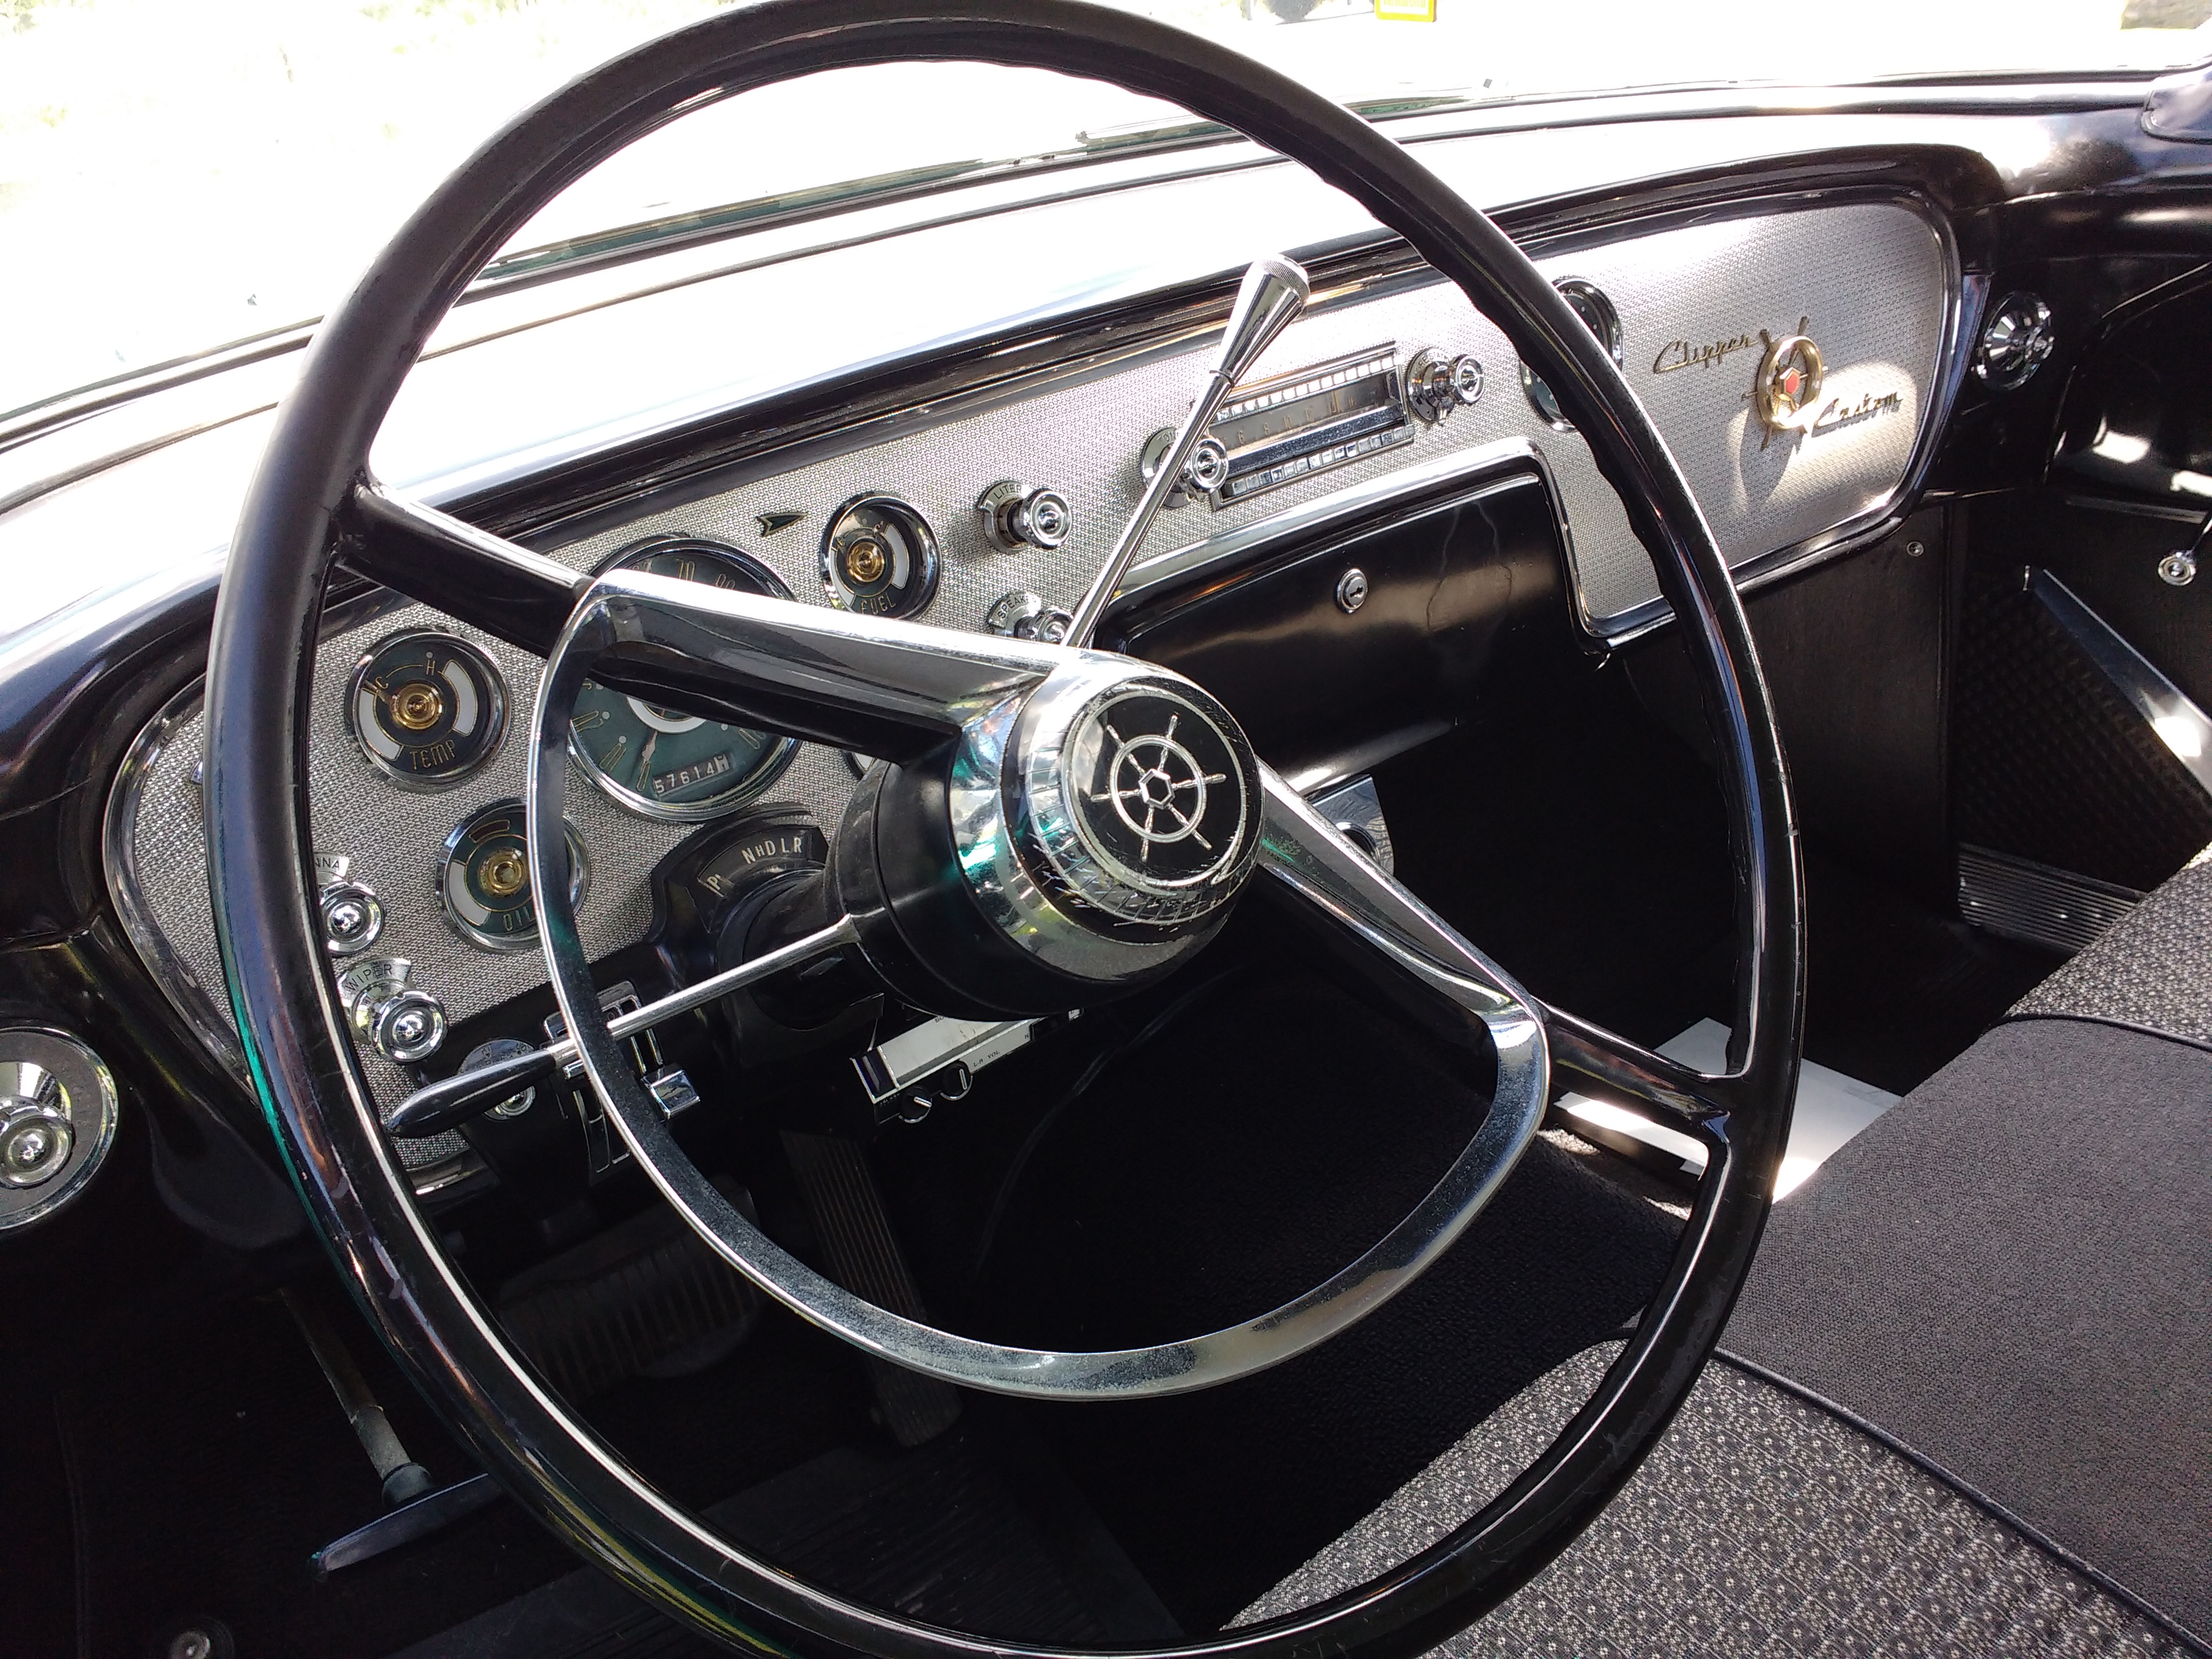 Steering wheel feels 3 feet wide - it just that modern wheels are so much smaller